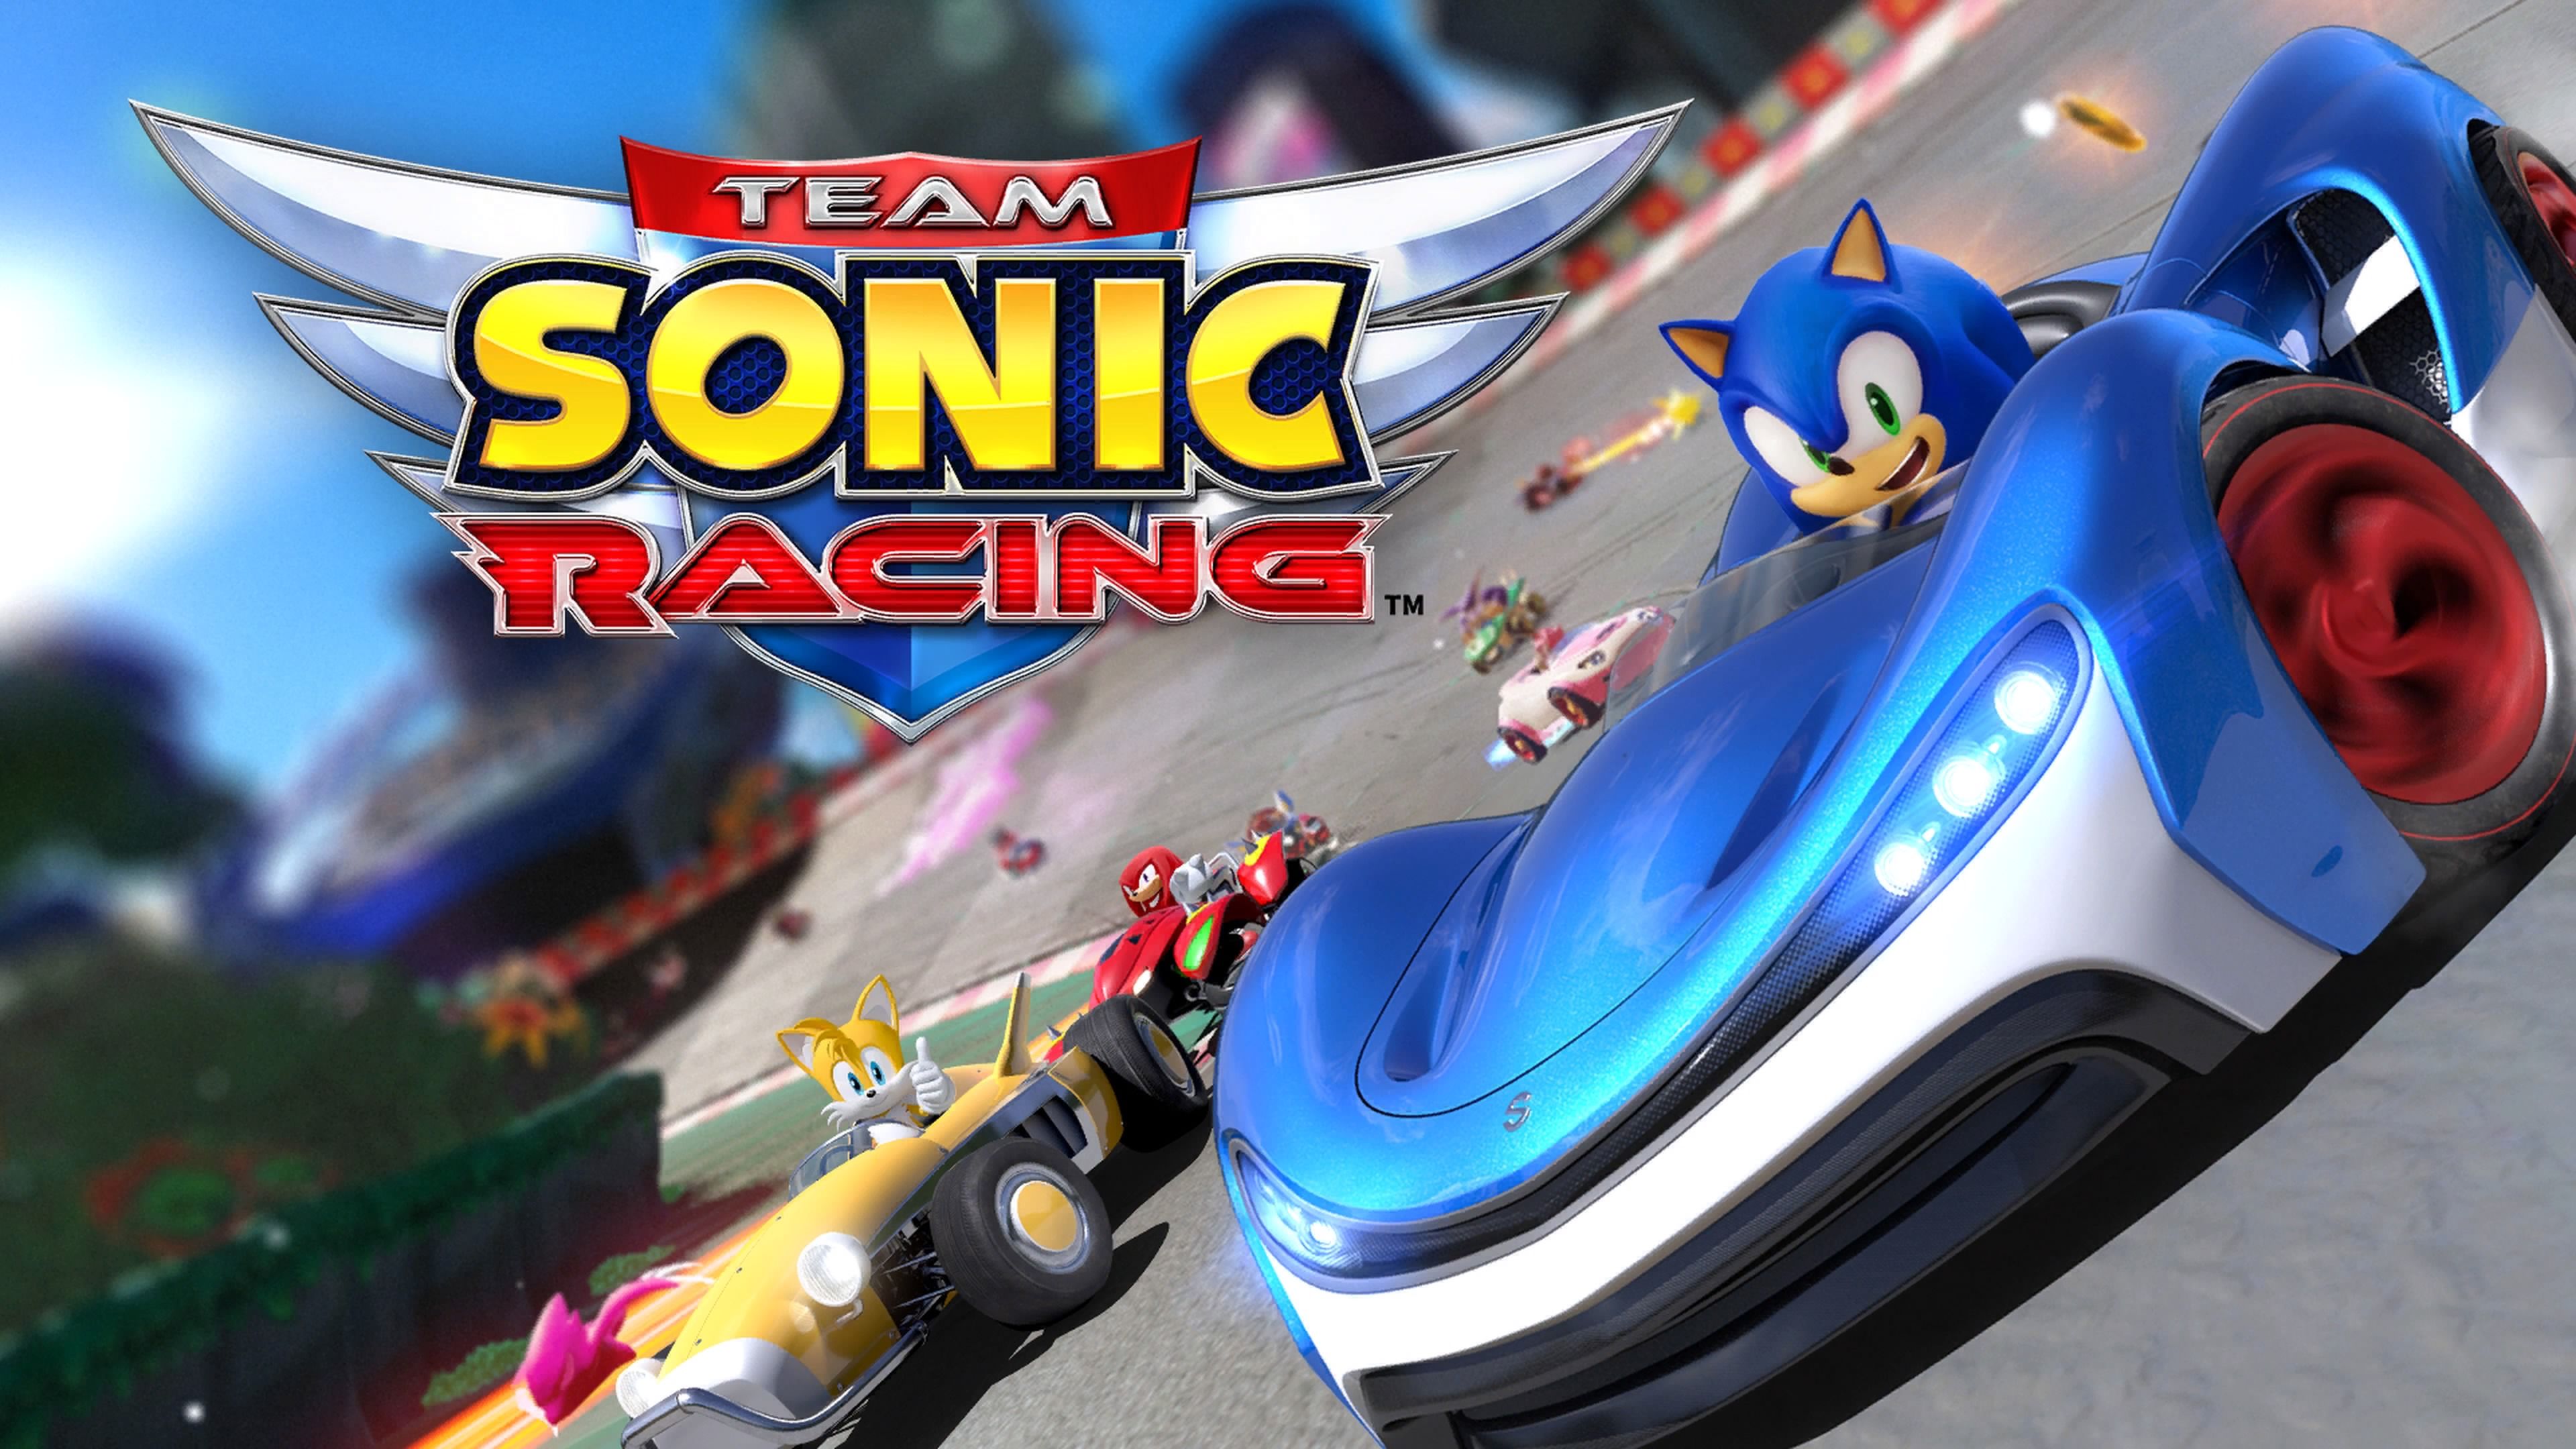 Sonic бег и гонки игра. Тим Соник рейсинг. Sonic Racing PLAYSTATION 4. Игра Соник тим. Игра Sonic Racing Шэдоу.